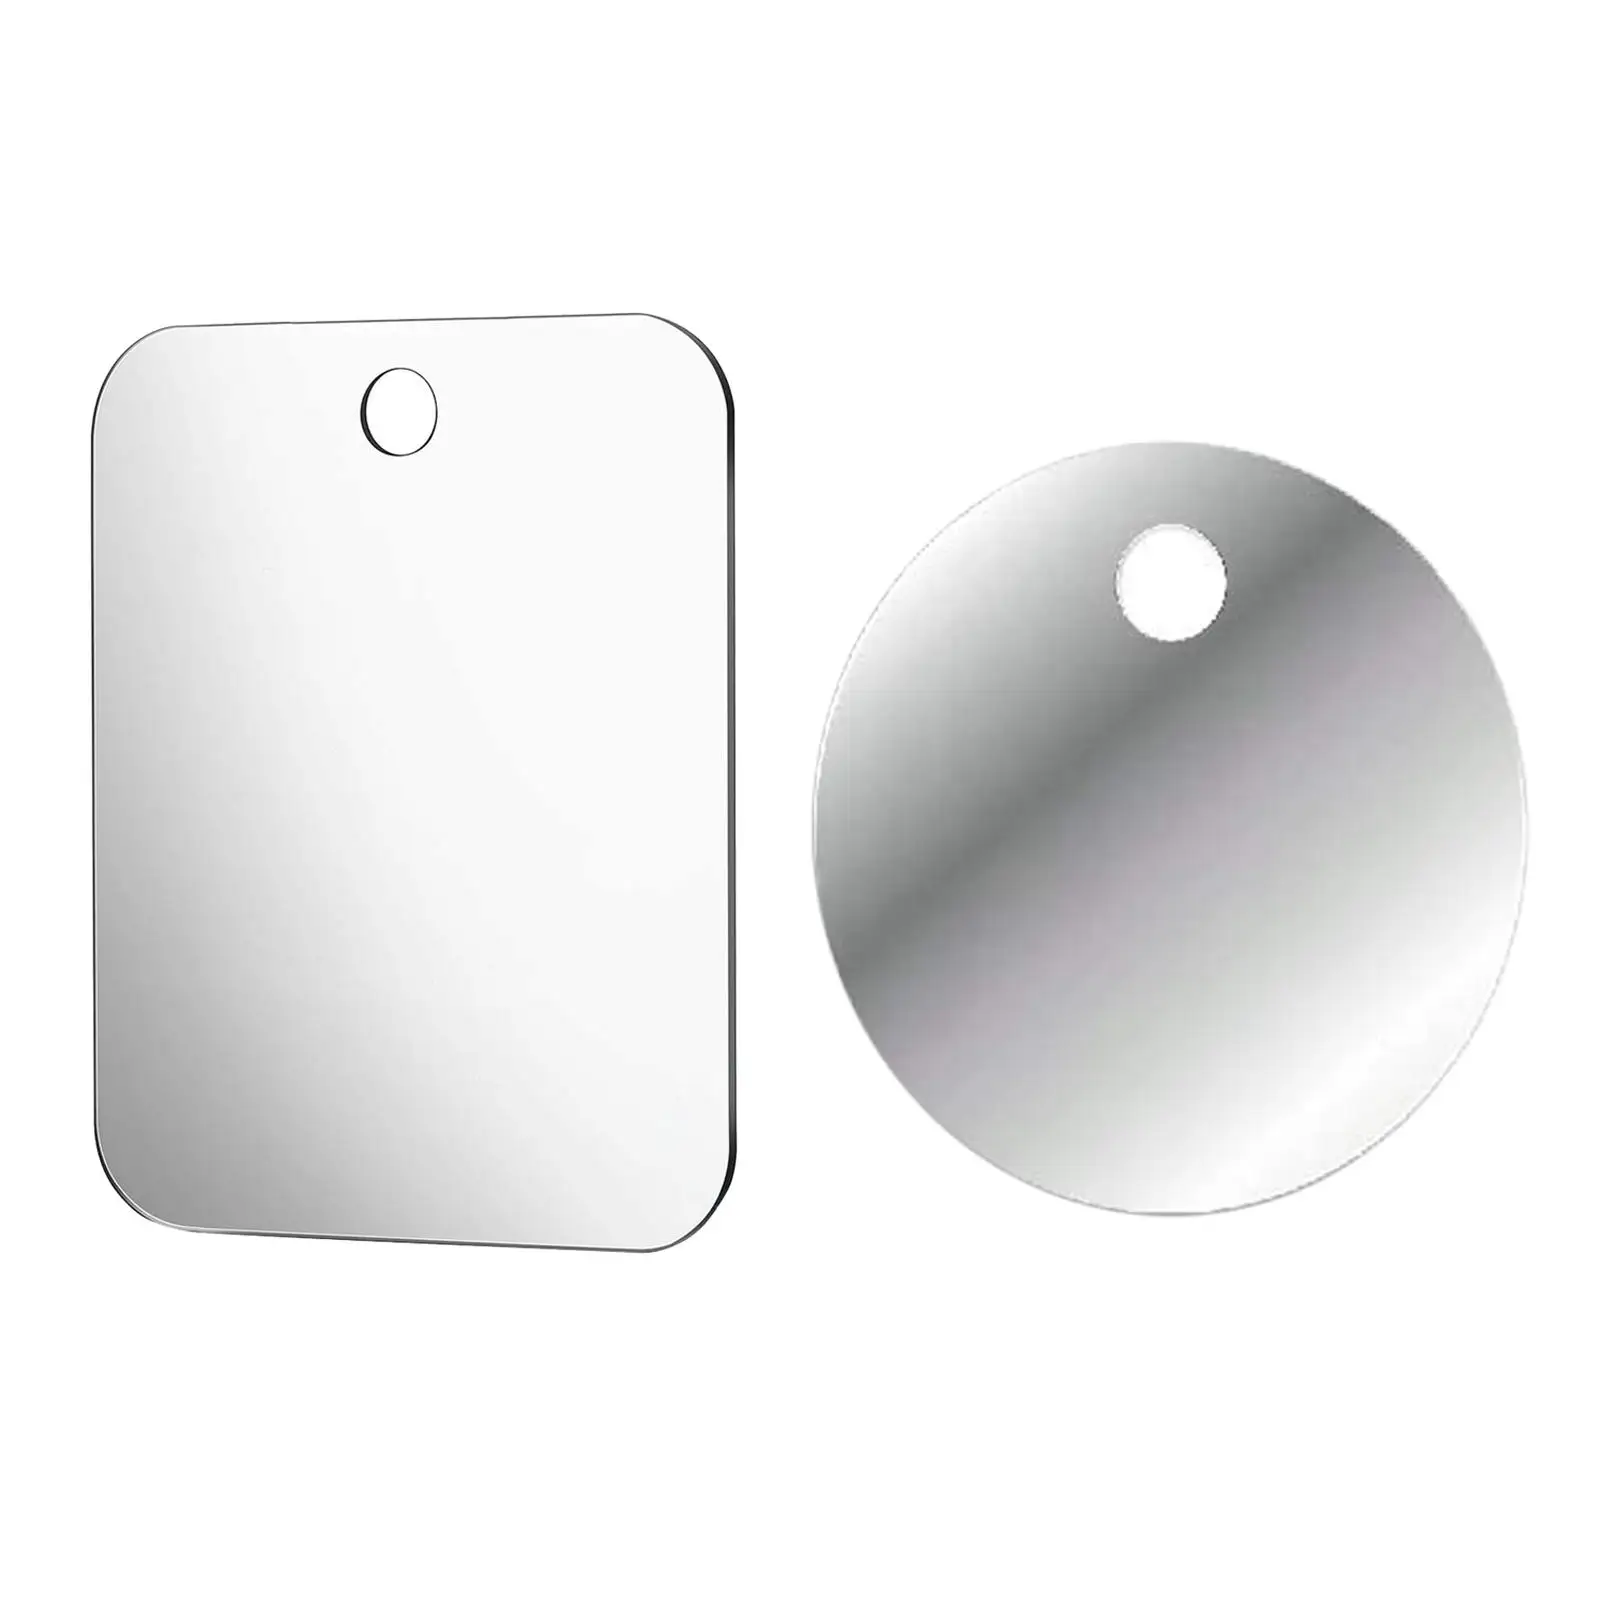  Mirror - Fogproof Shatterproof Shower Mirror - Portable Wall Hanging Shower Mirror